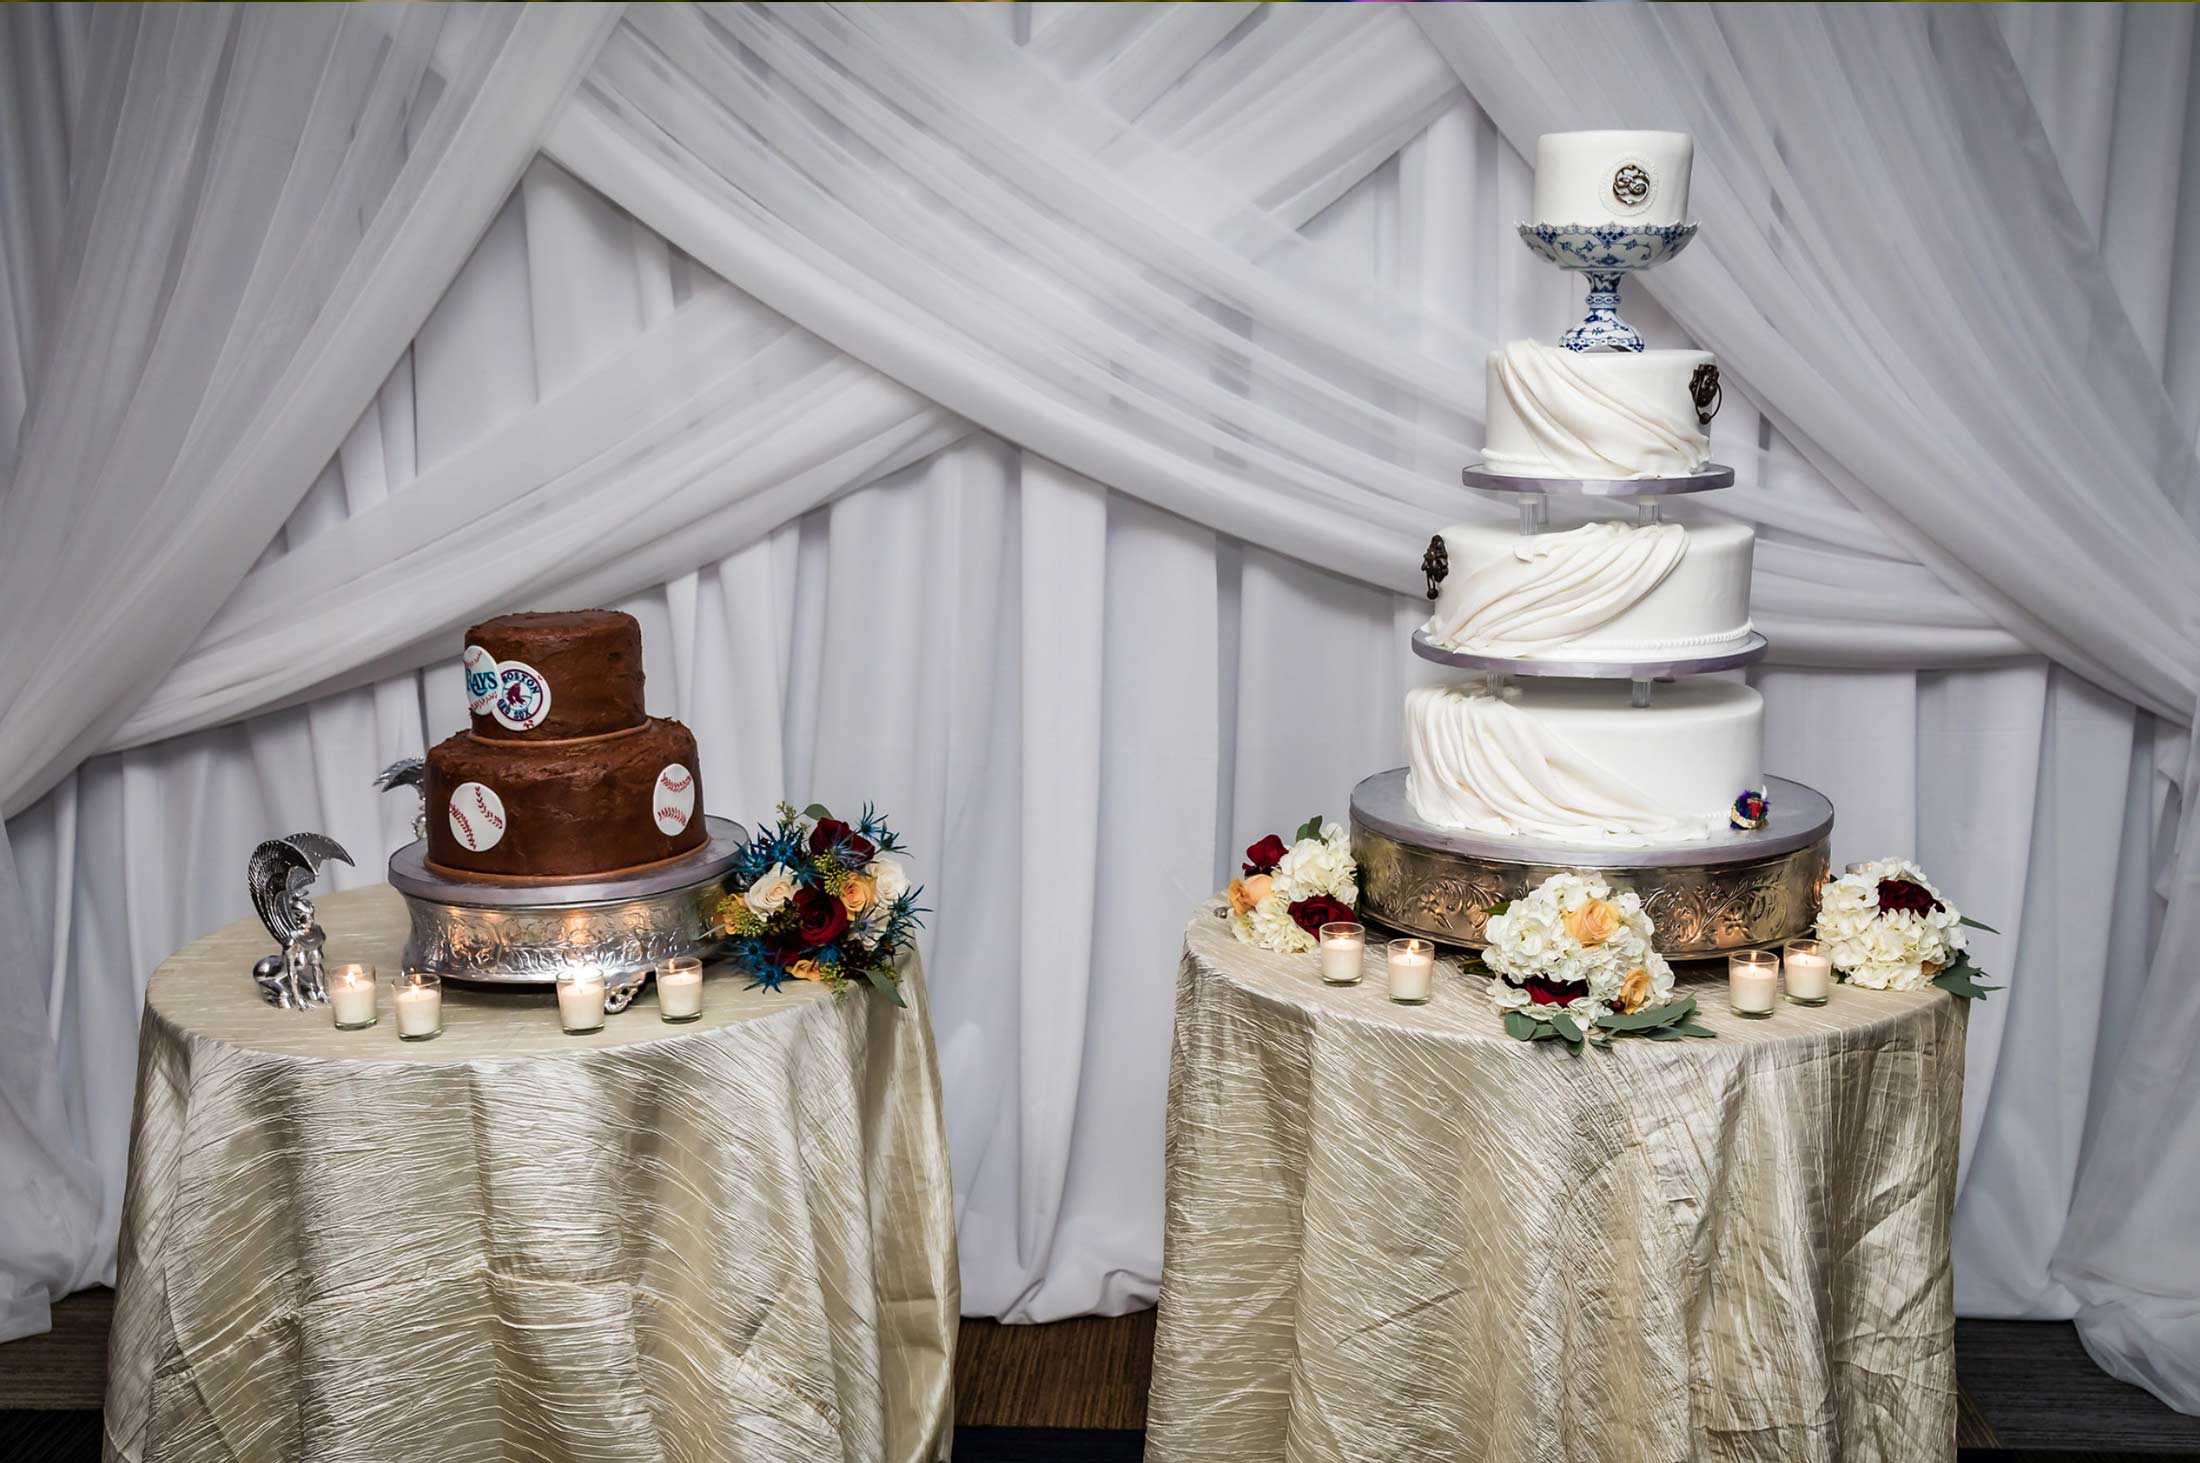 chocolate grooms cake and 4 tier wedding cake